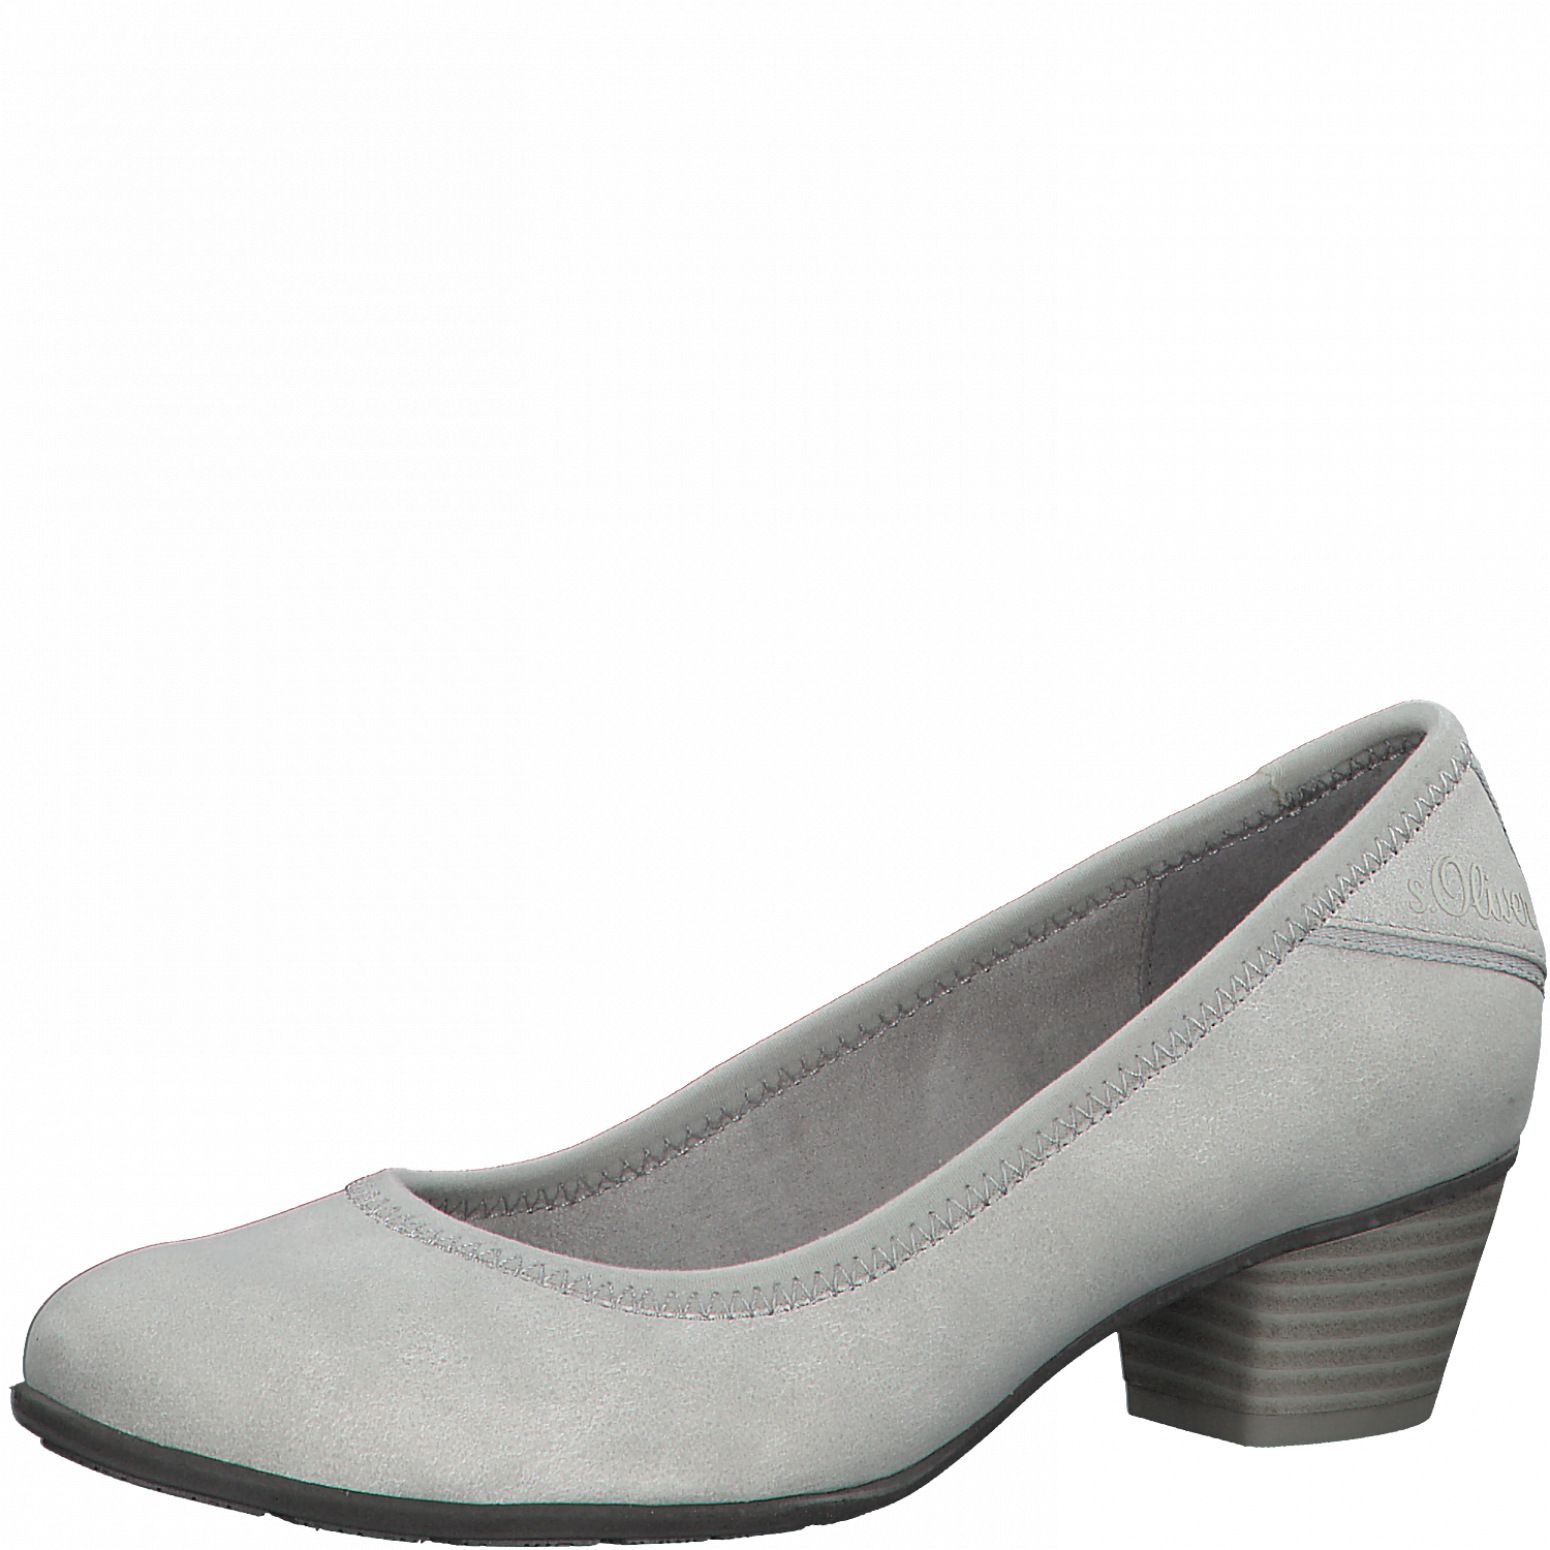 S.OLIVER női cipő 5-22301-26 210 LT.GREY